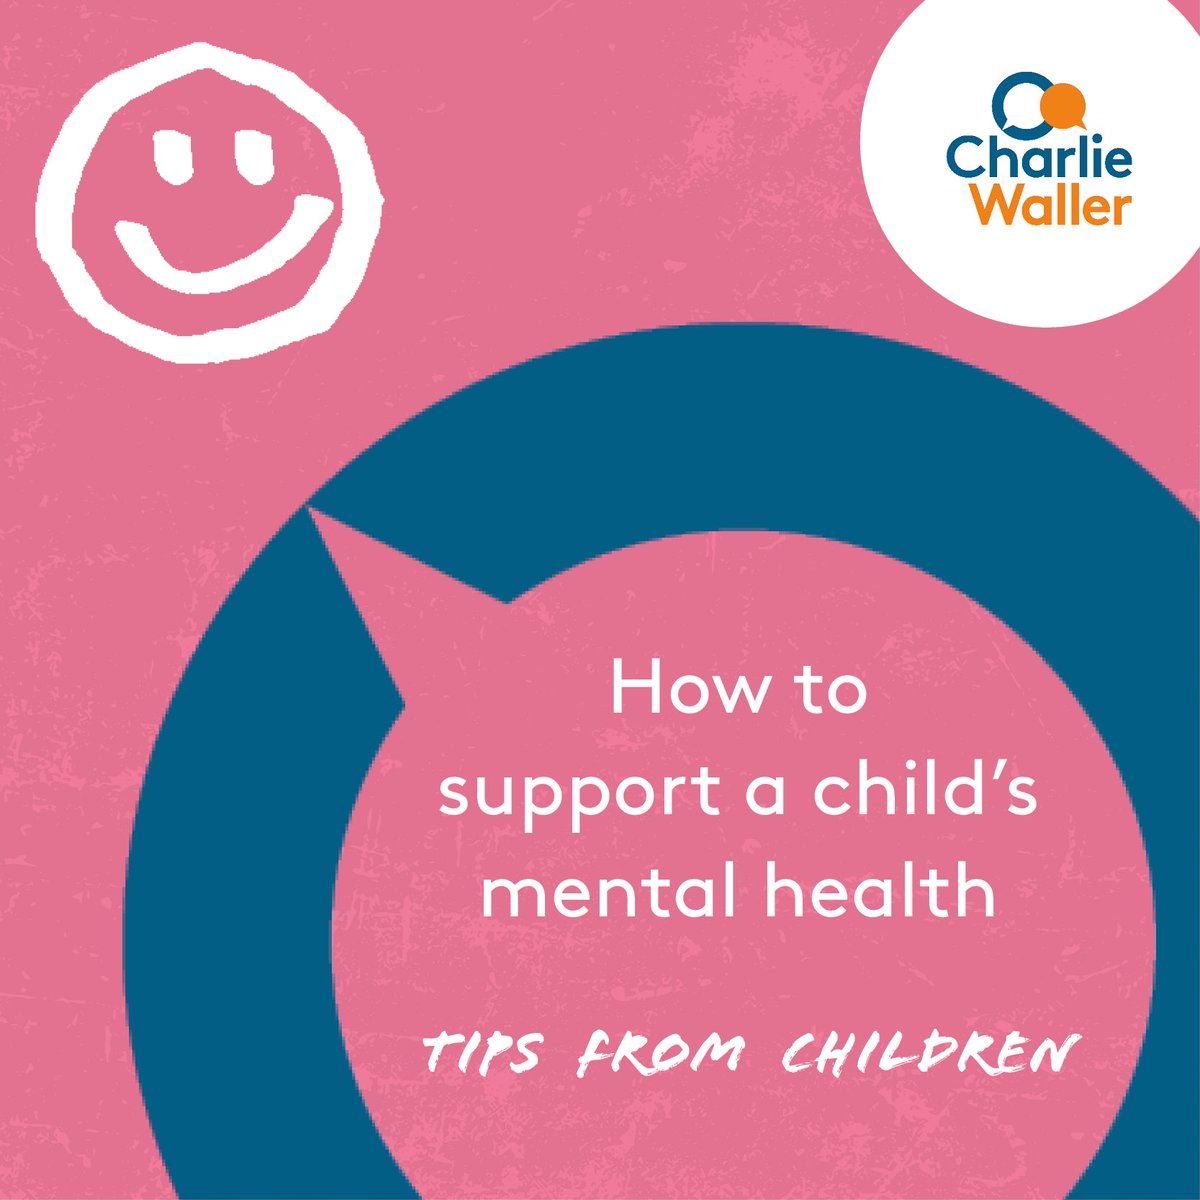 Little ways to support a child’s mental health - from children themselves! A thread (1) #ChildrensMentalHealthWeek